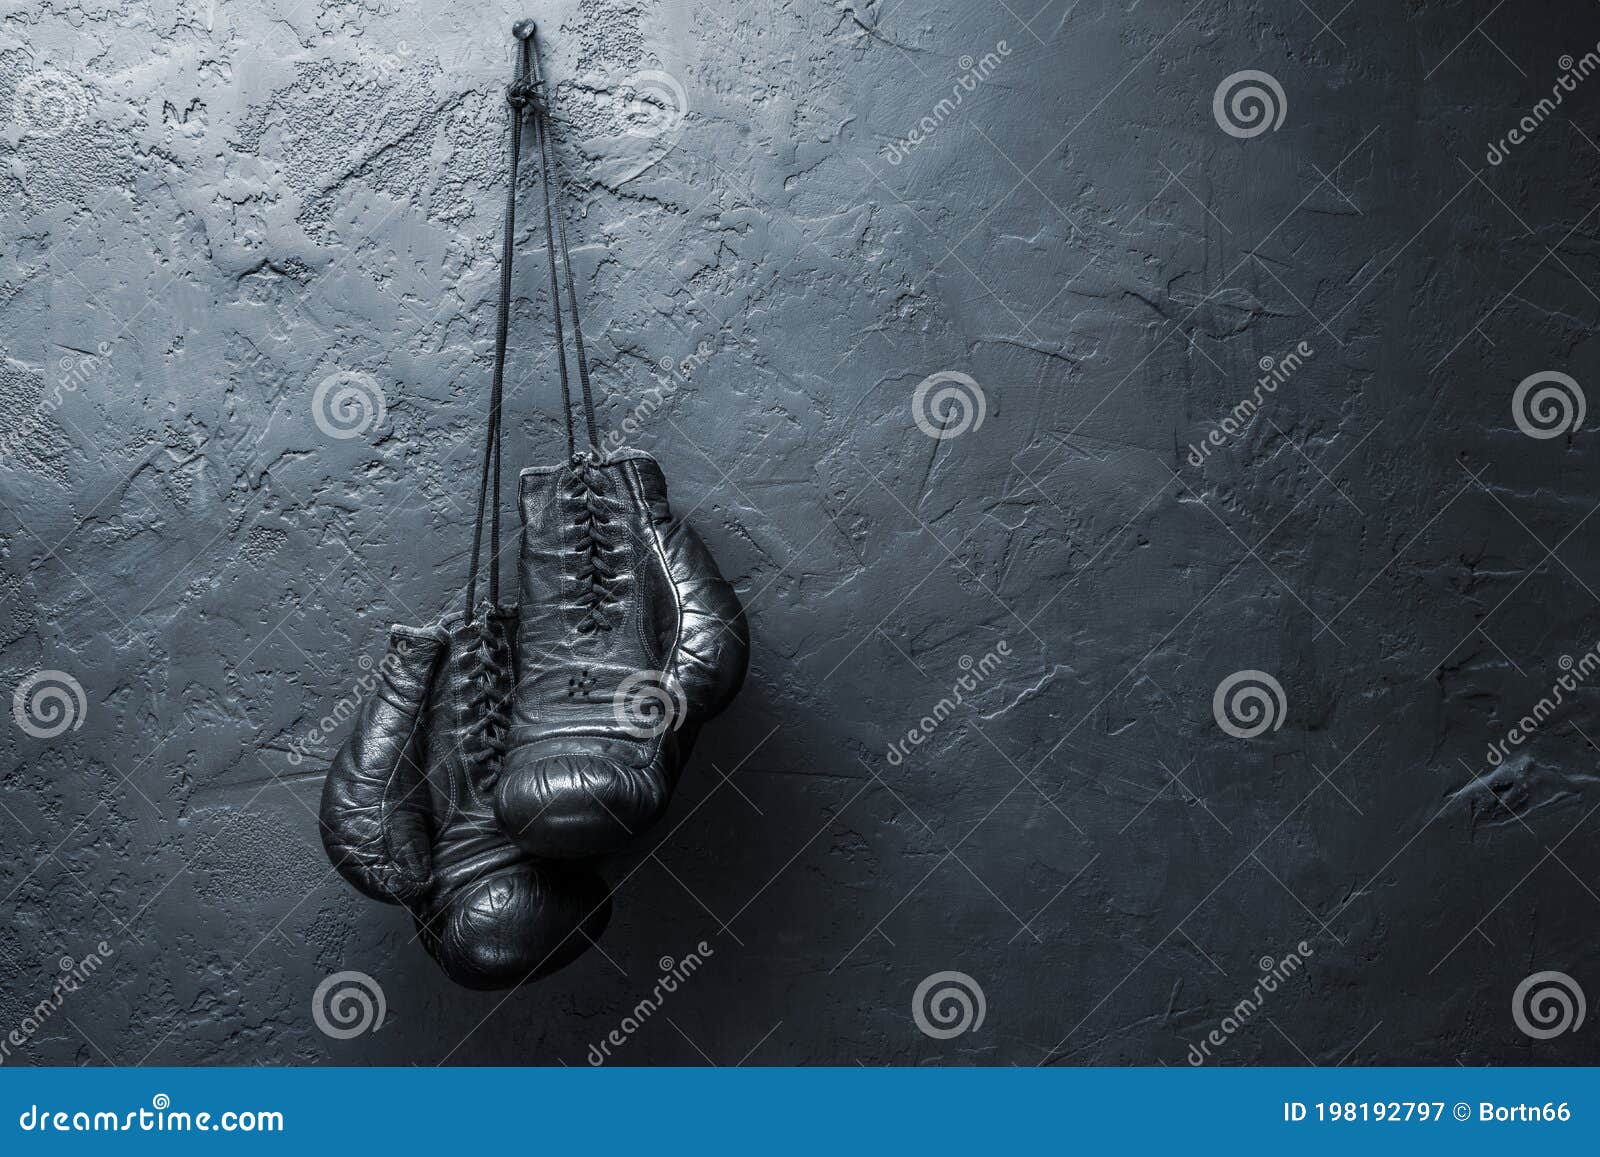 old boxing gloves hang